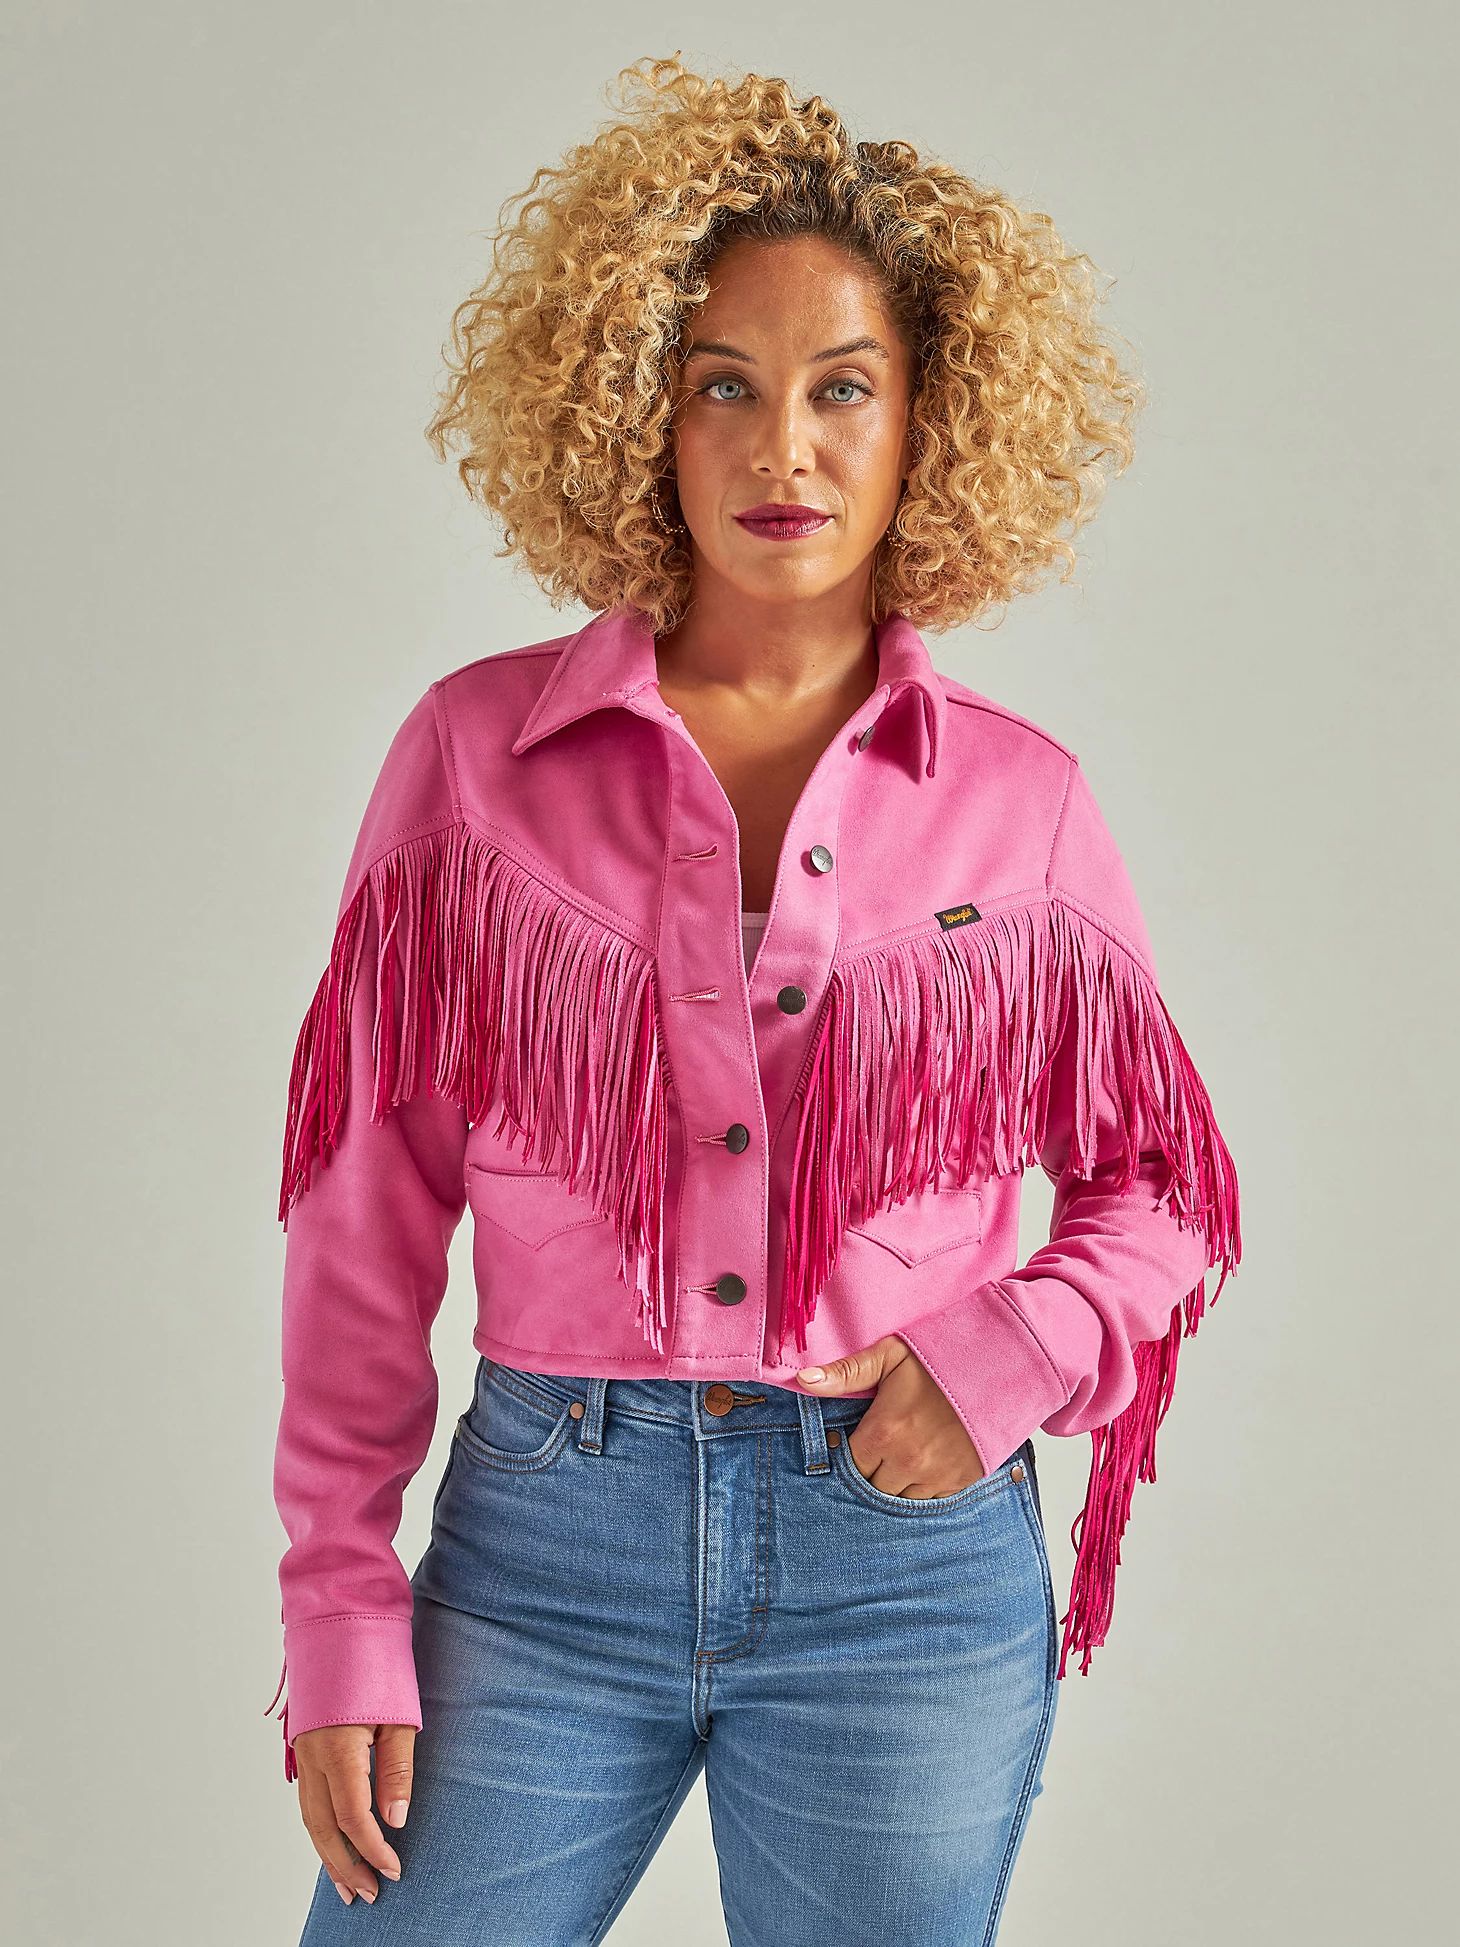 Women's Wrangler Retro® Crop Fringe Jacket in Pink | Wrangler